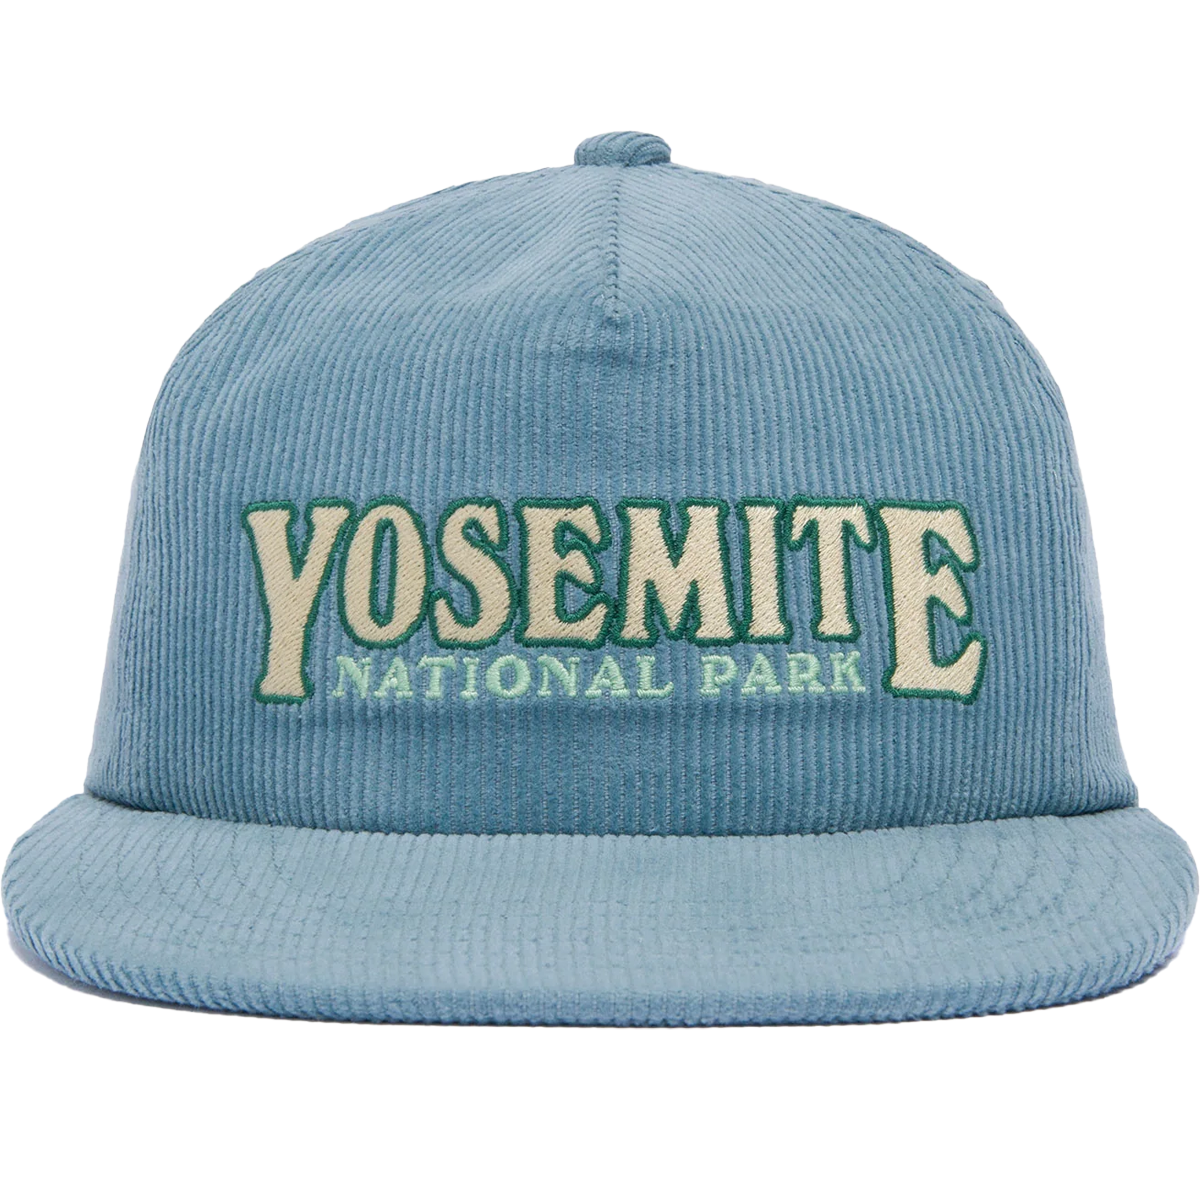 Yosemite National Park Cord Hat alternate view